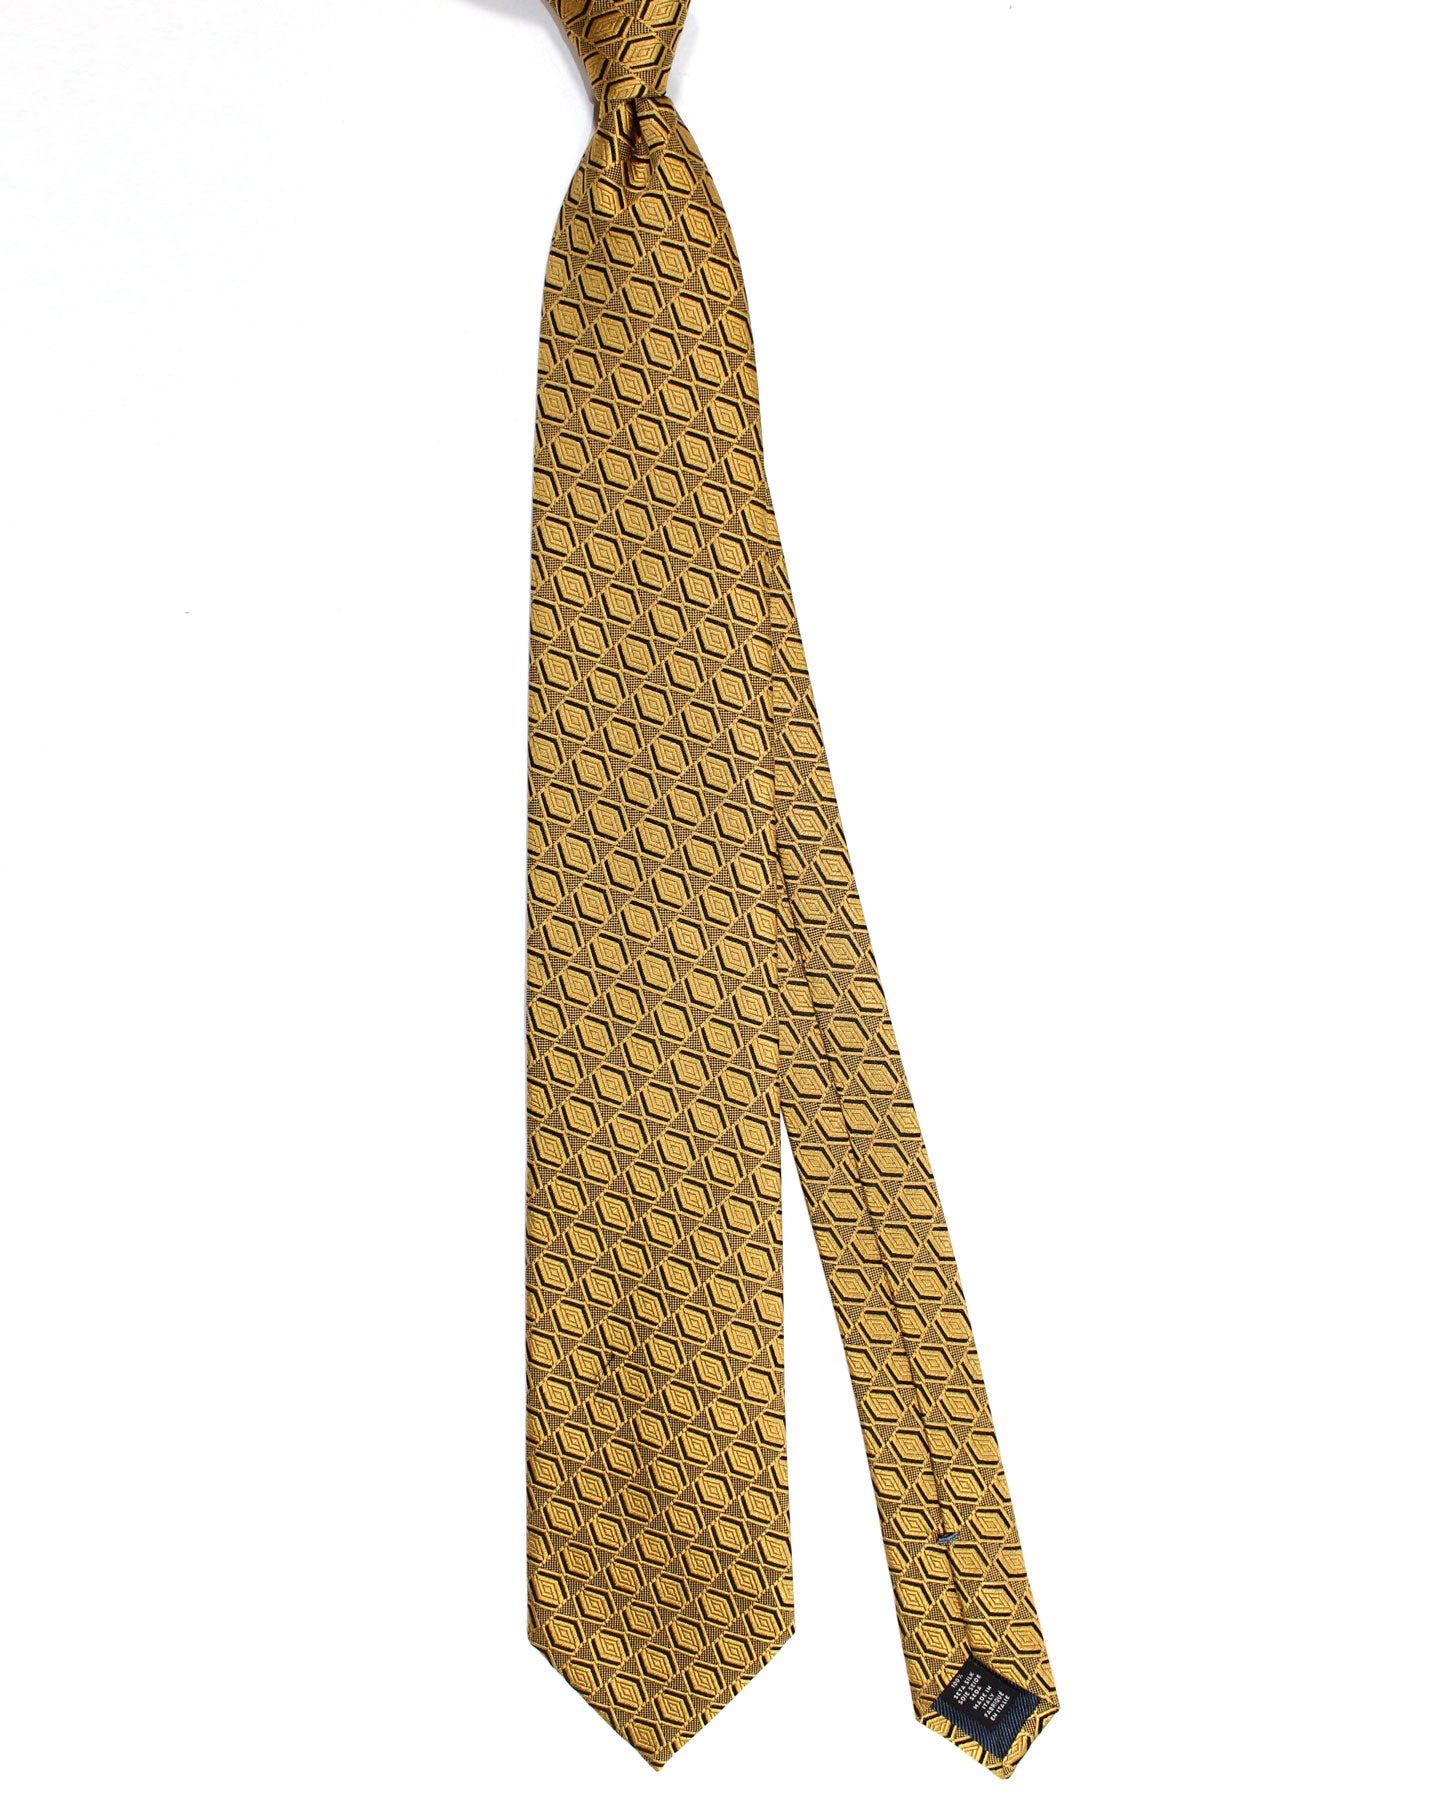 Ermenegildo Zegna Silk Tie Mustard Gold Geometric - Hand Made in Italy